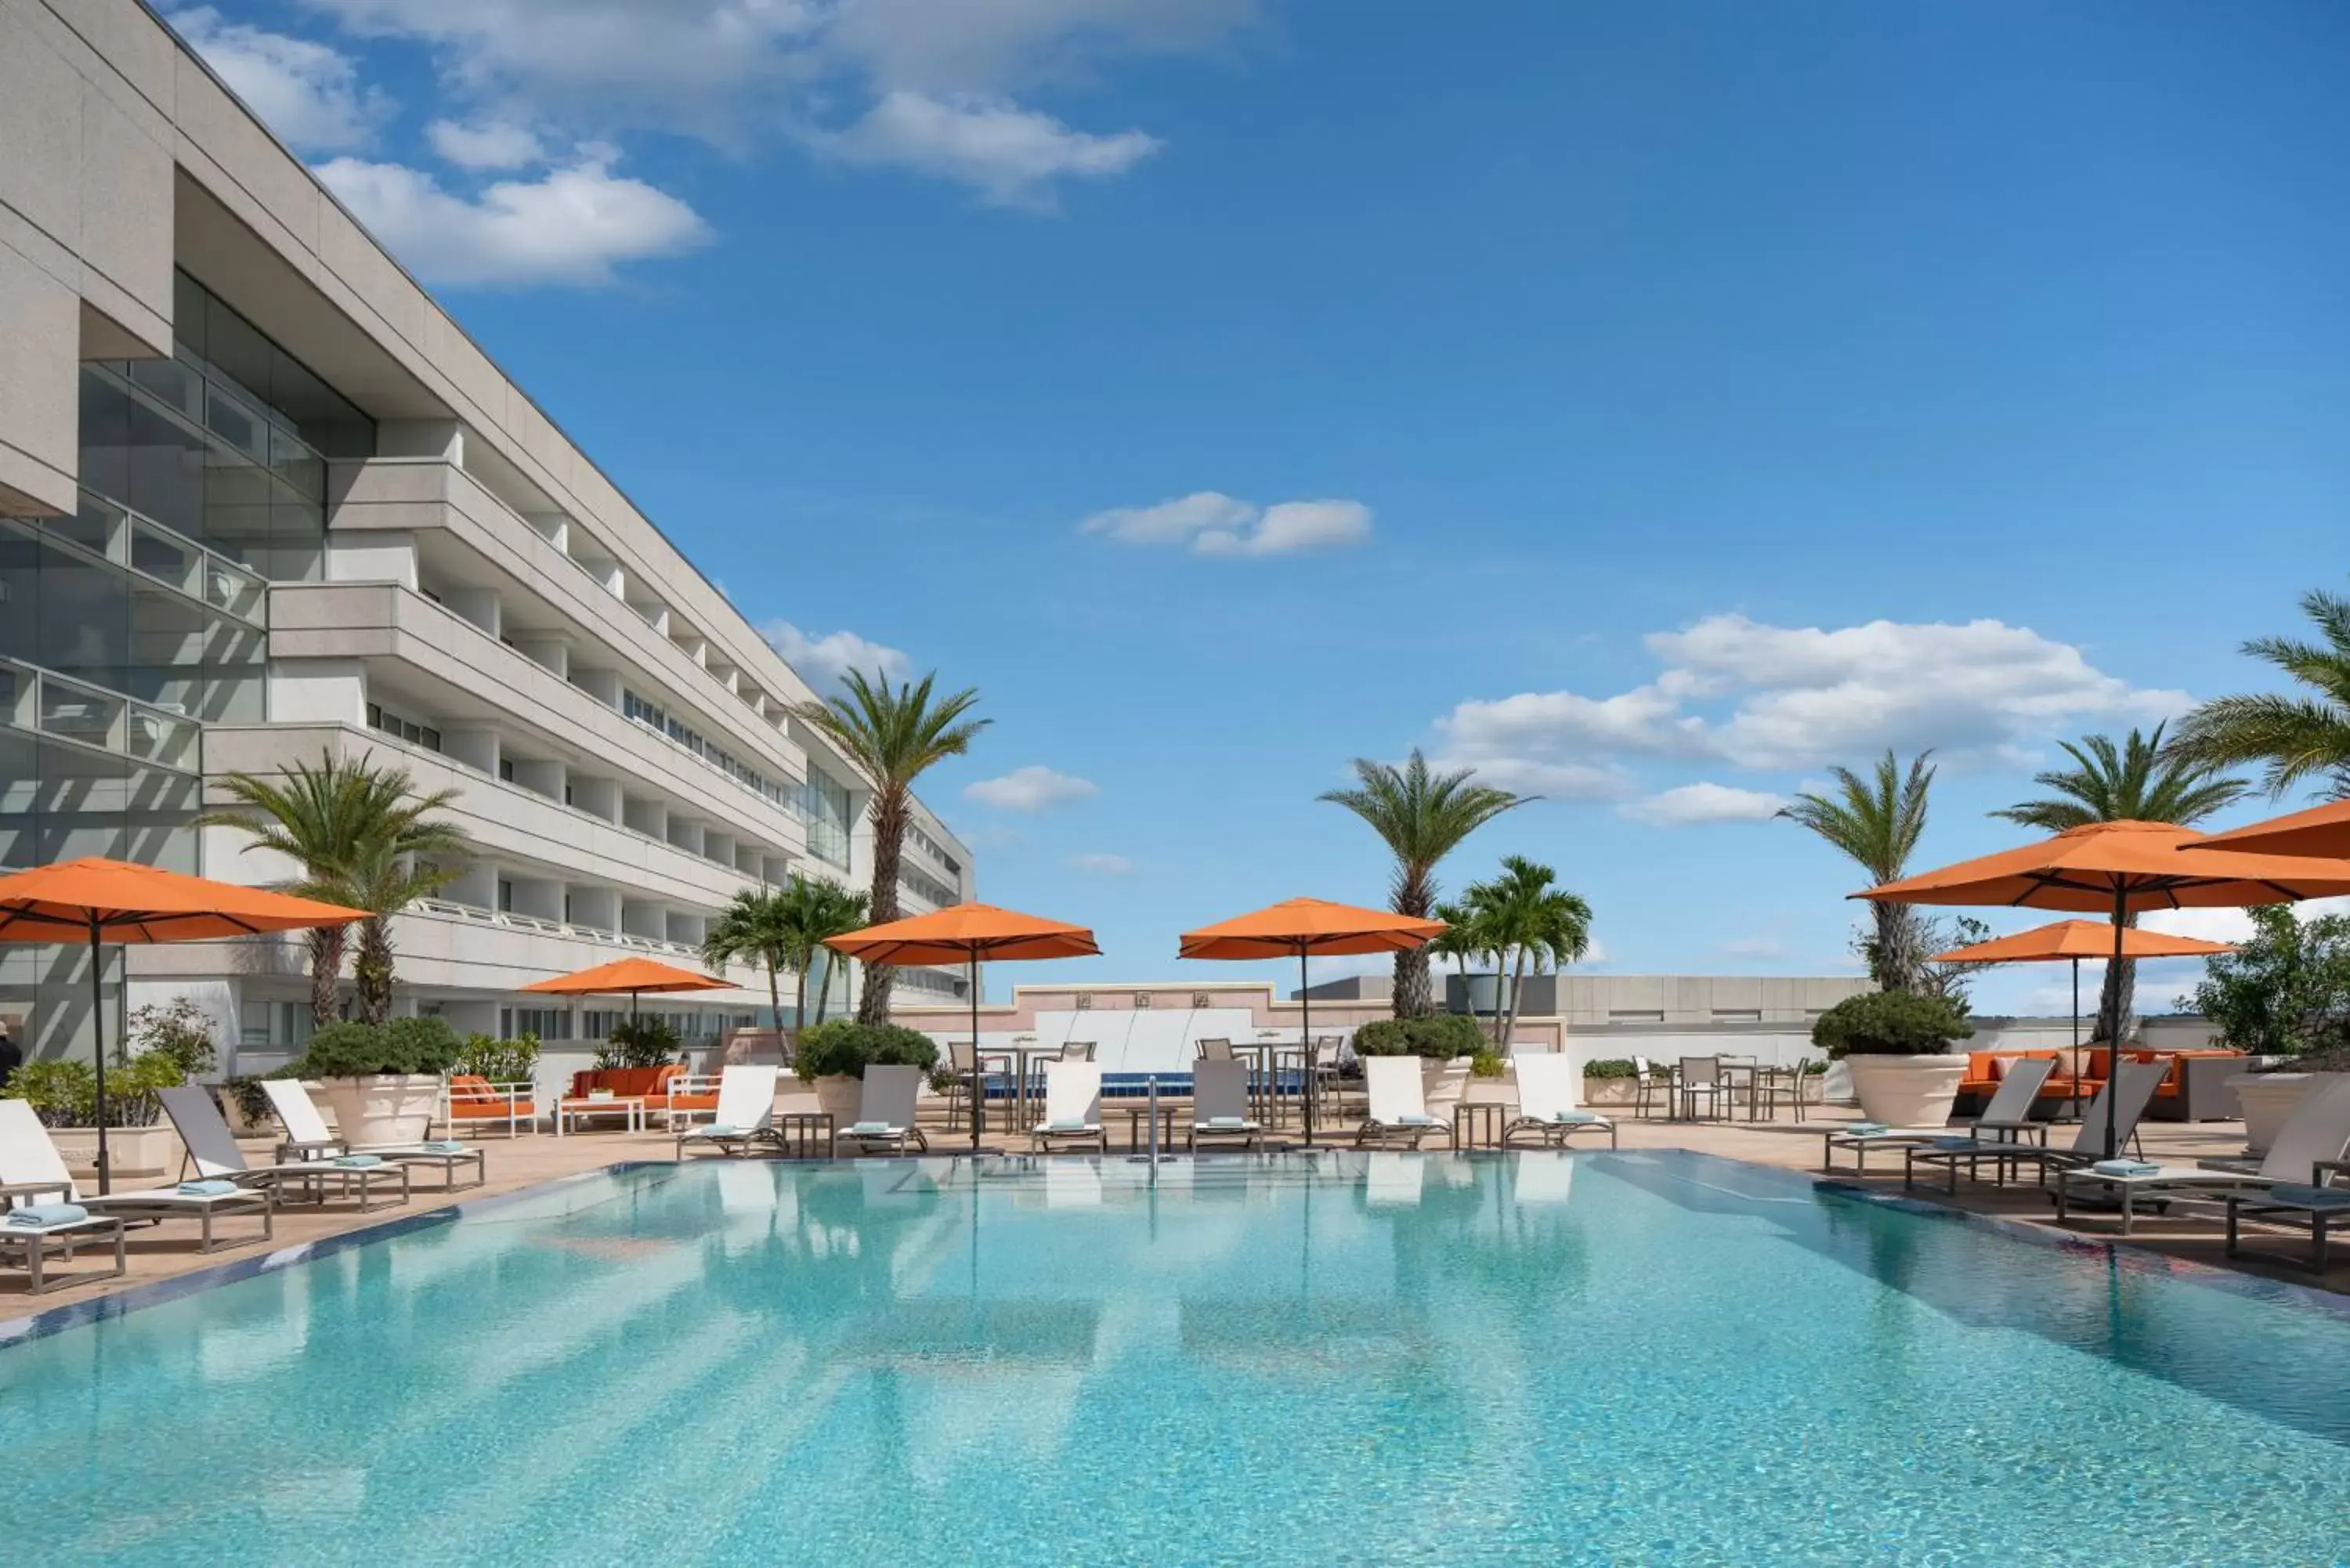 Activities, Swimming Pool in Hyatt Regency Orlando International Airport Hotel